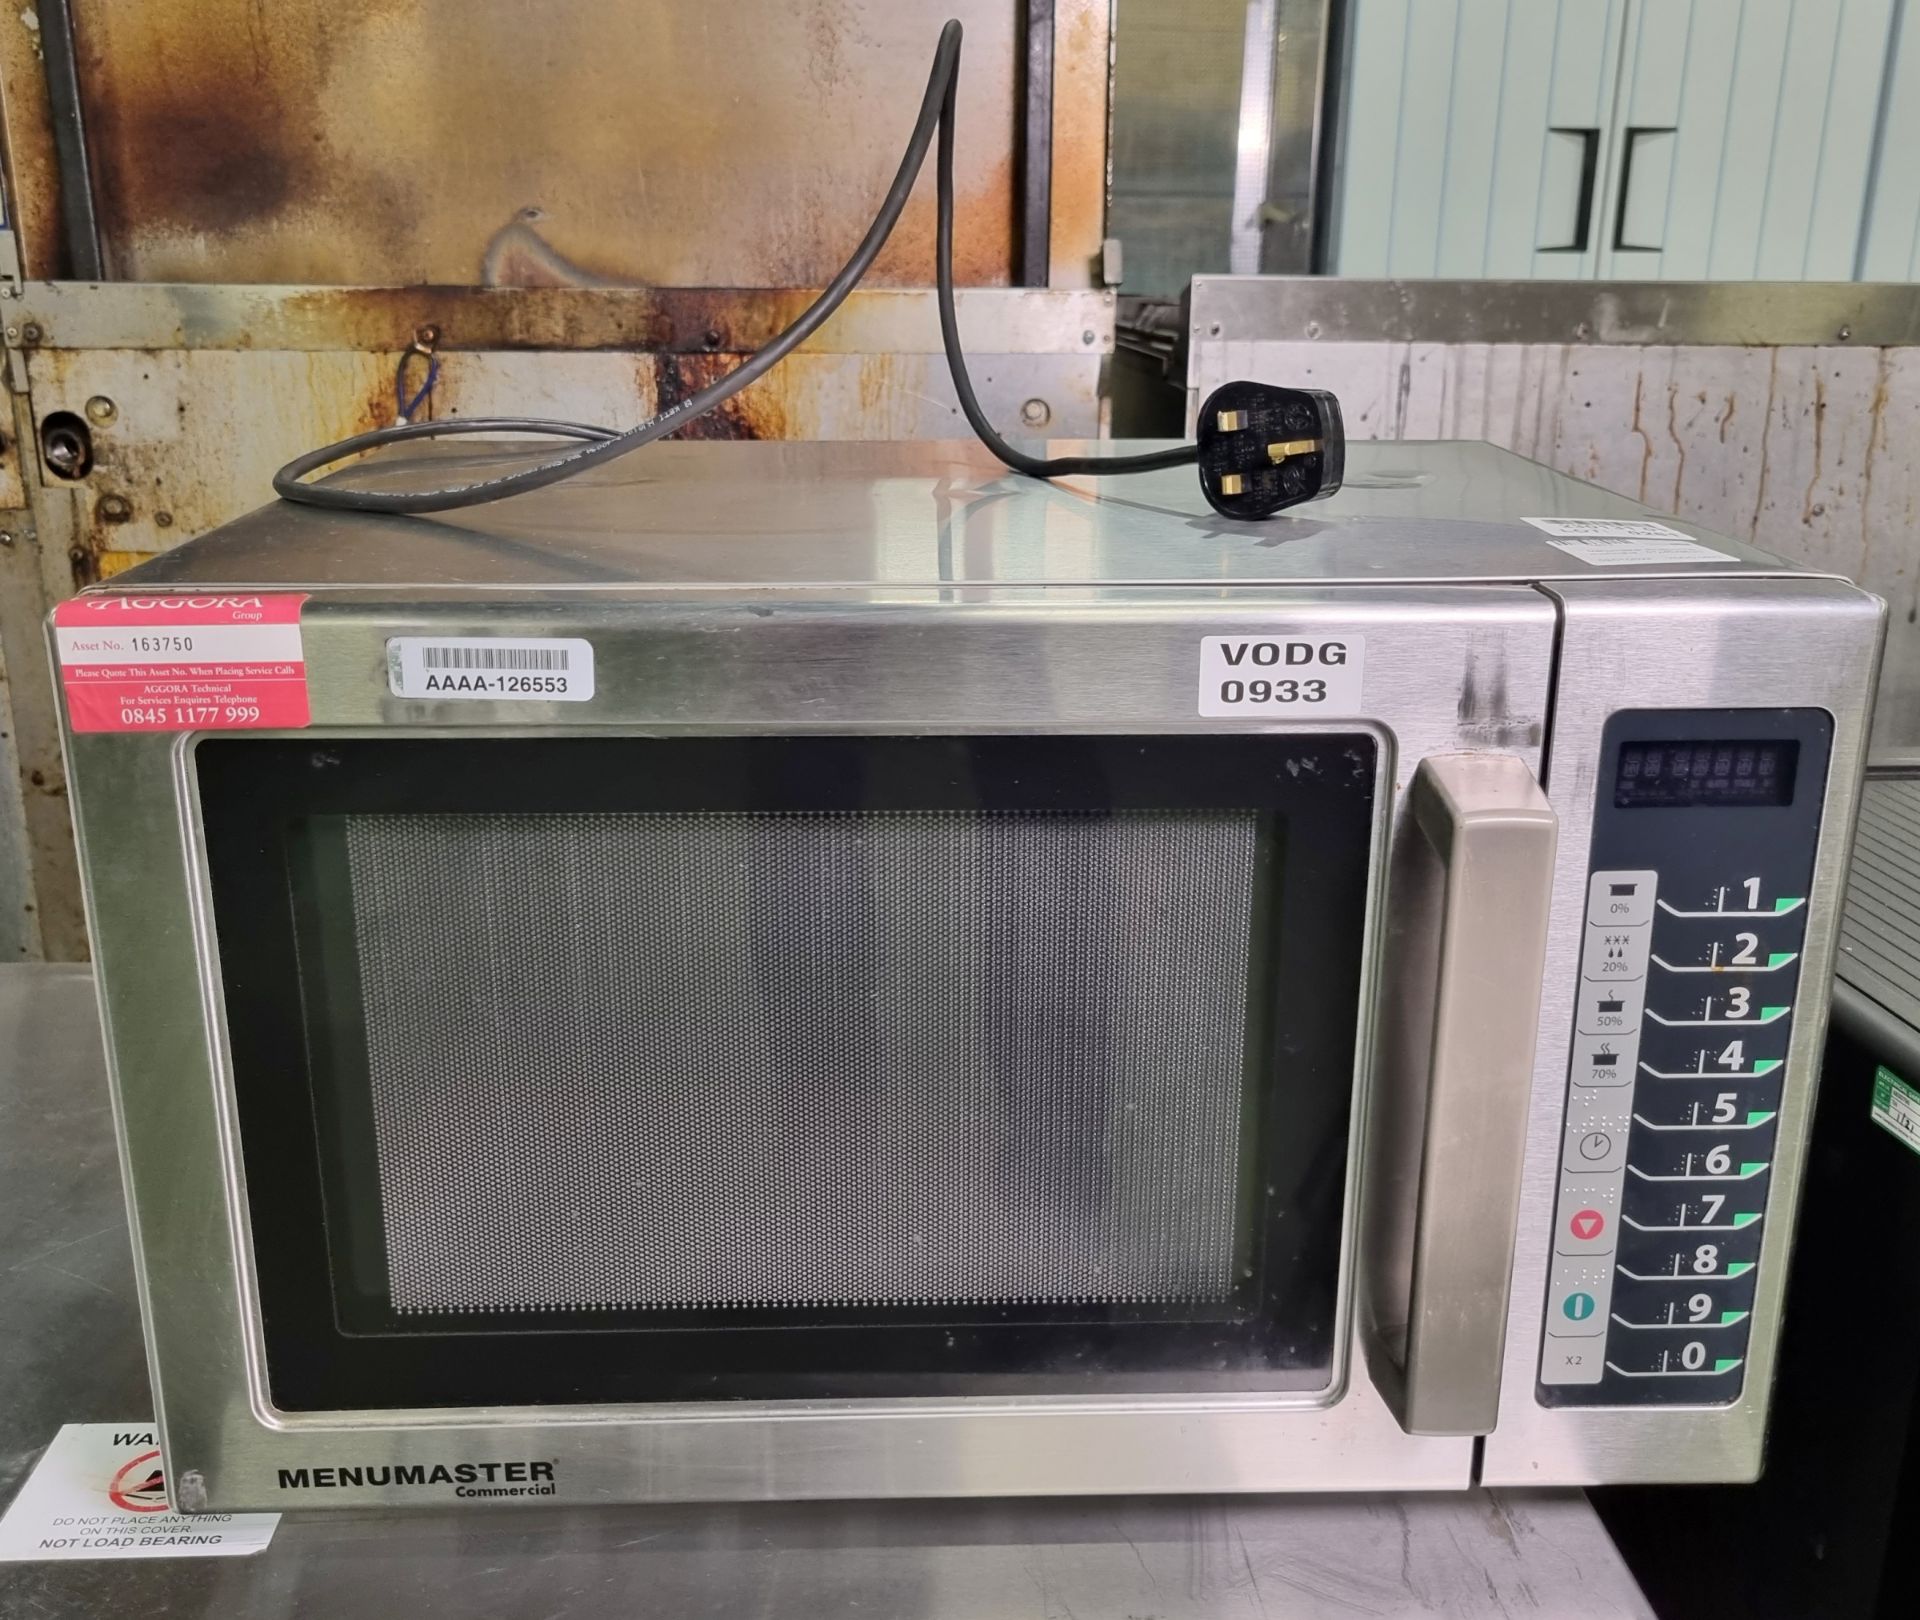 Menumaster RCS511TS microwave - 57x45x36cm